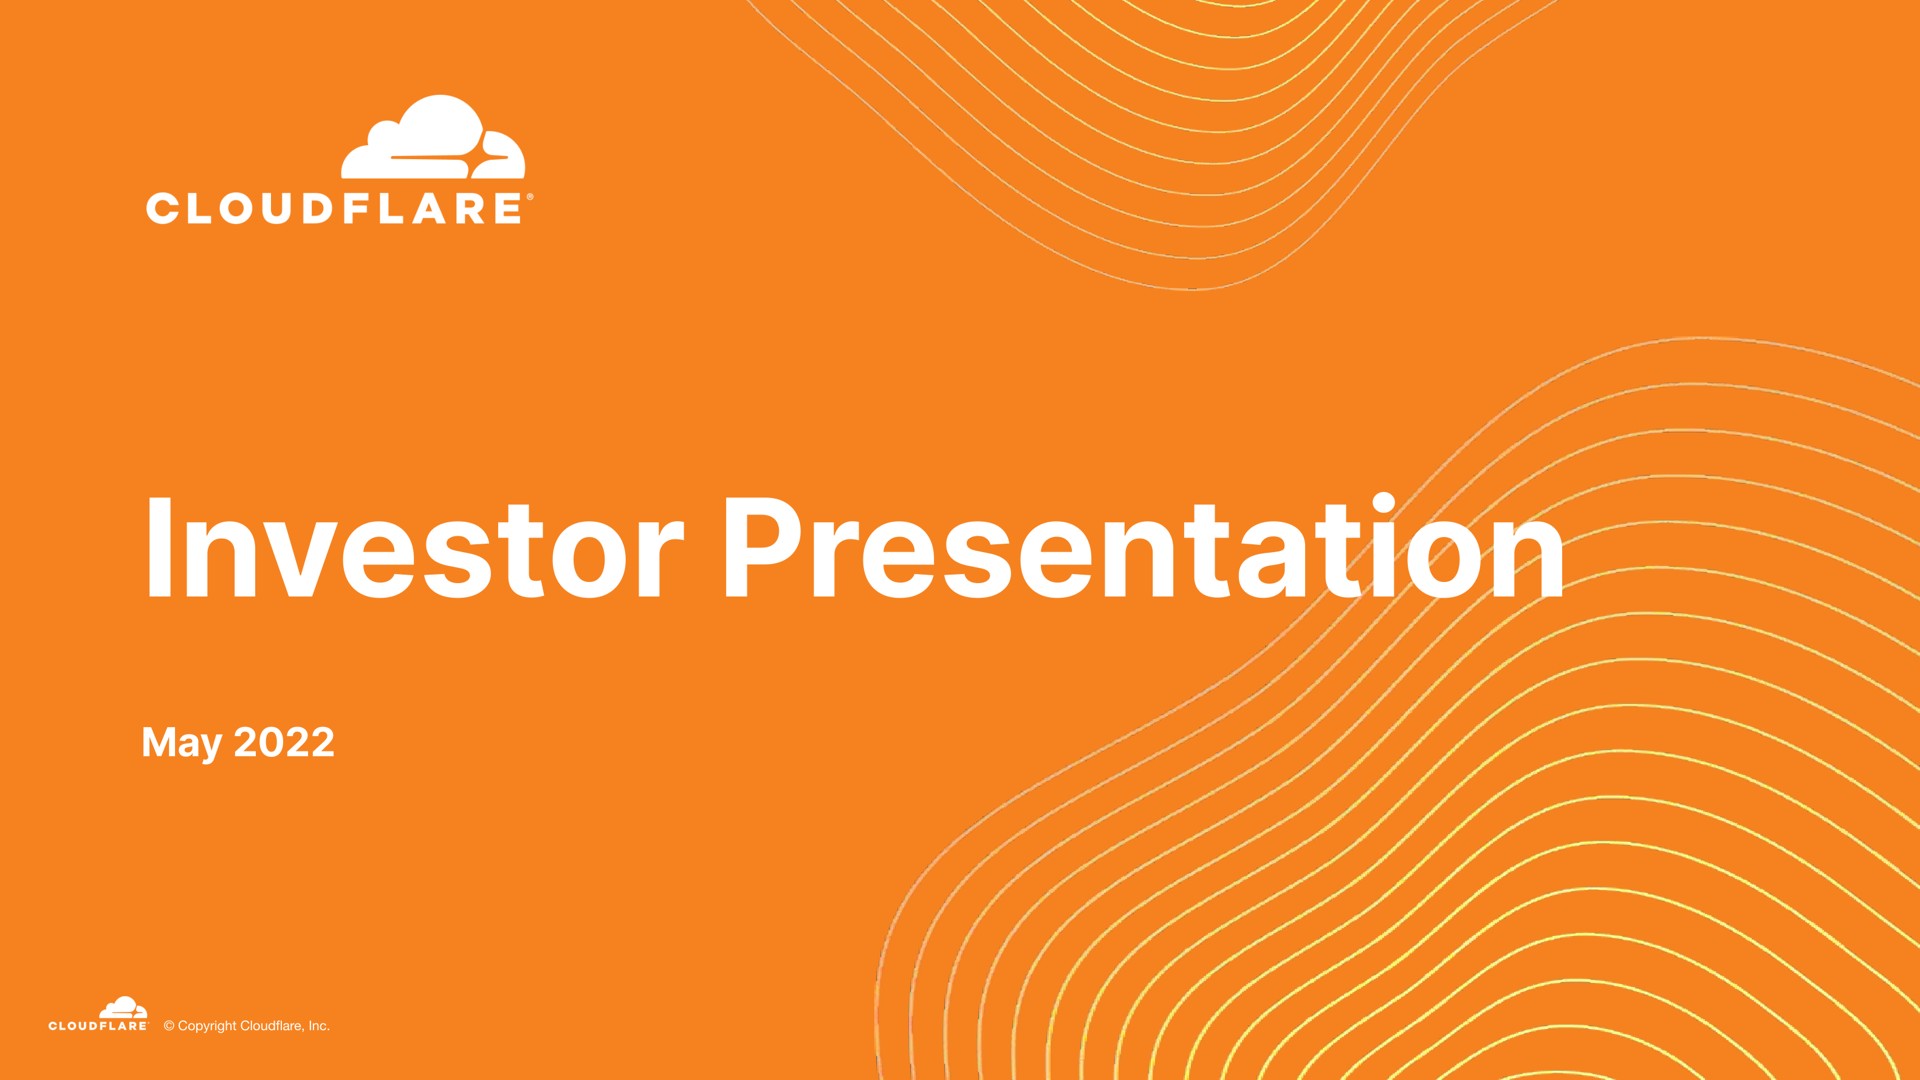 investor presentation | Cloudflare